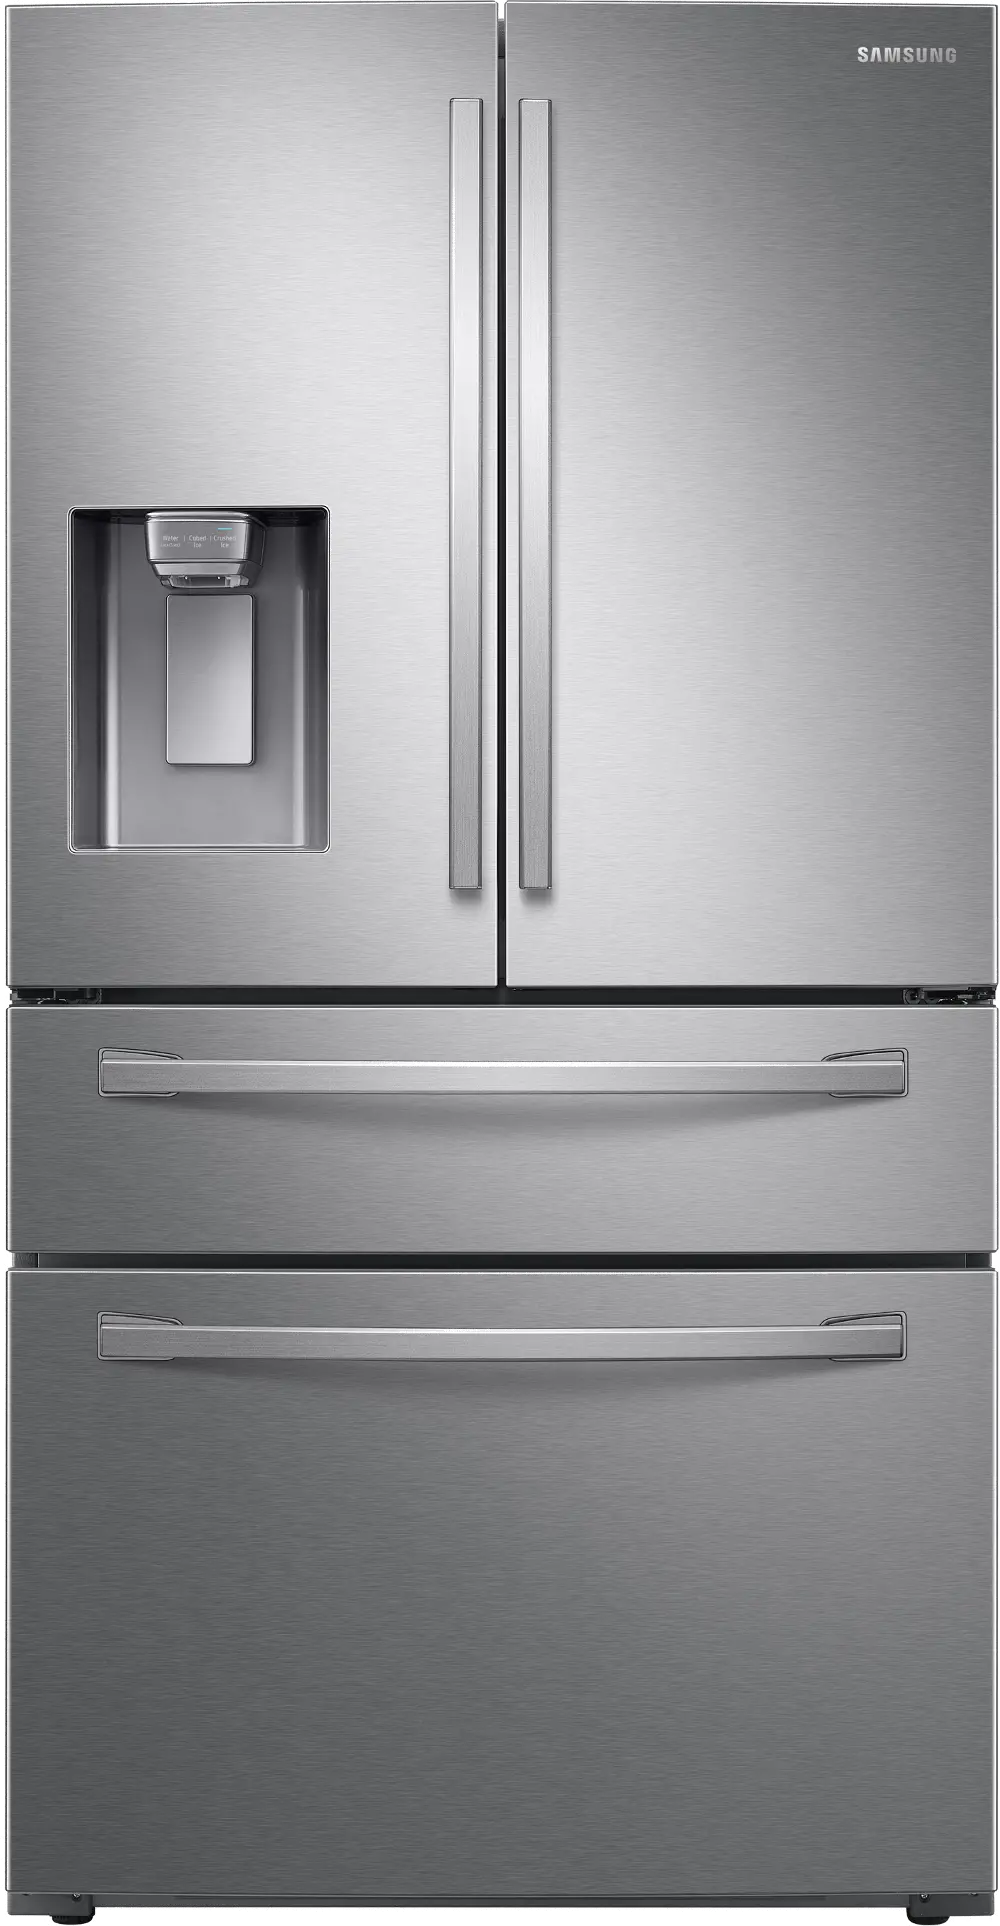 RF24R7201SR Samsung 22.6 cu ft 4 Door Refrigerator - Counter Depth Stainless Steel-1